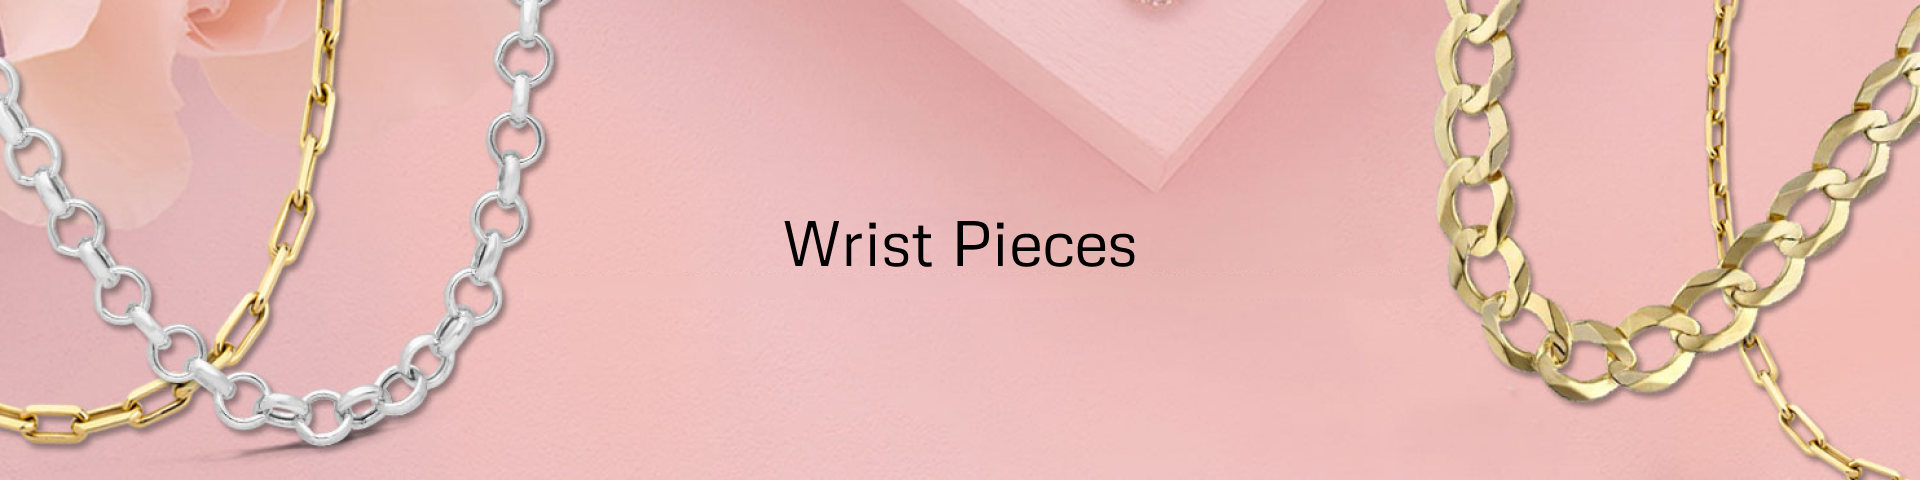 Wrist pieces